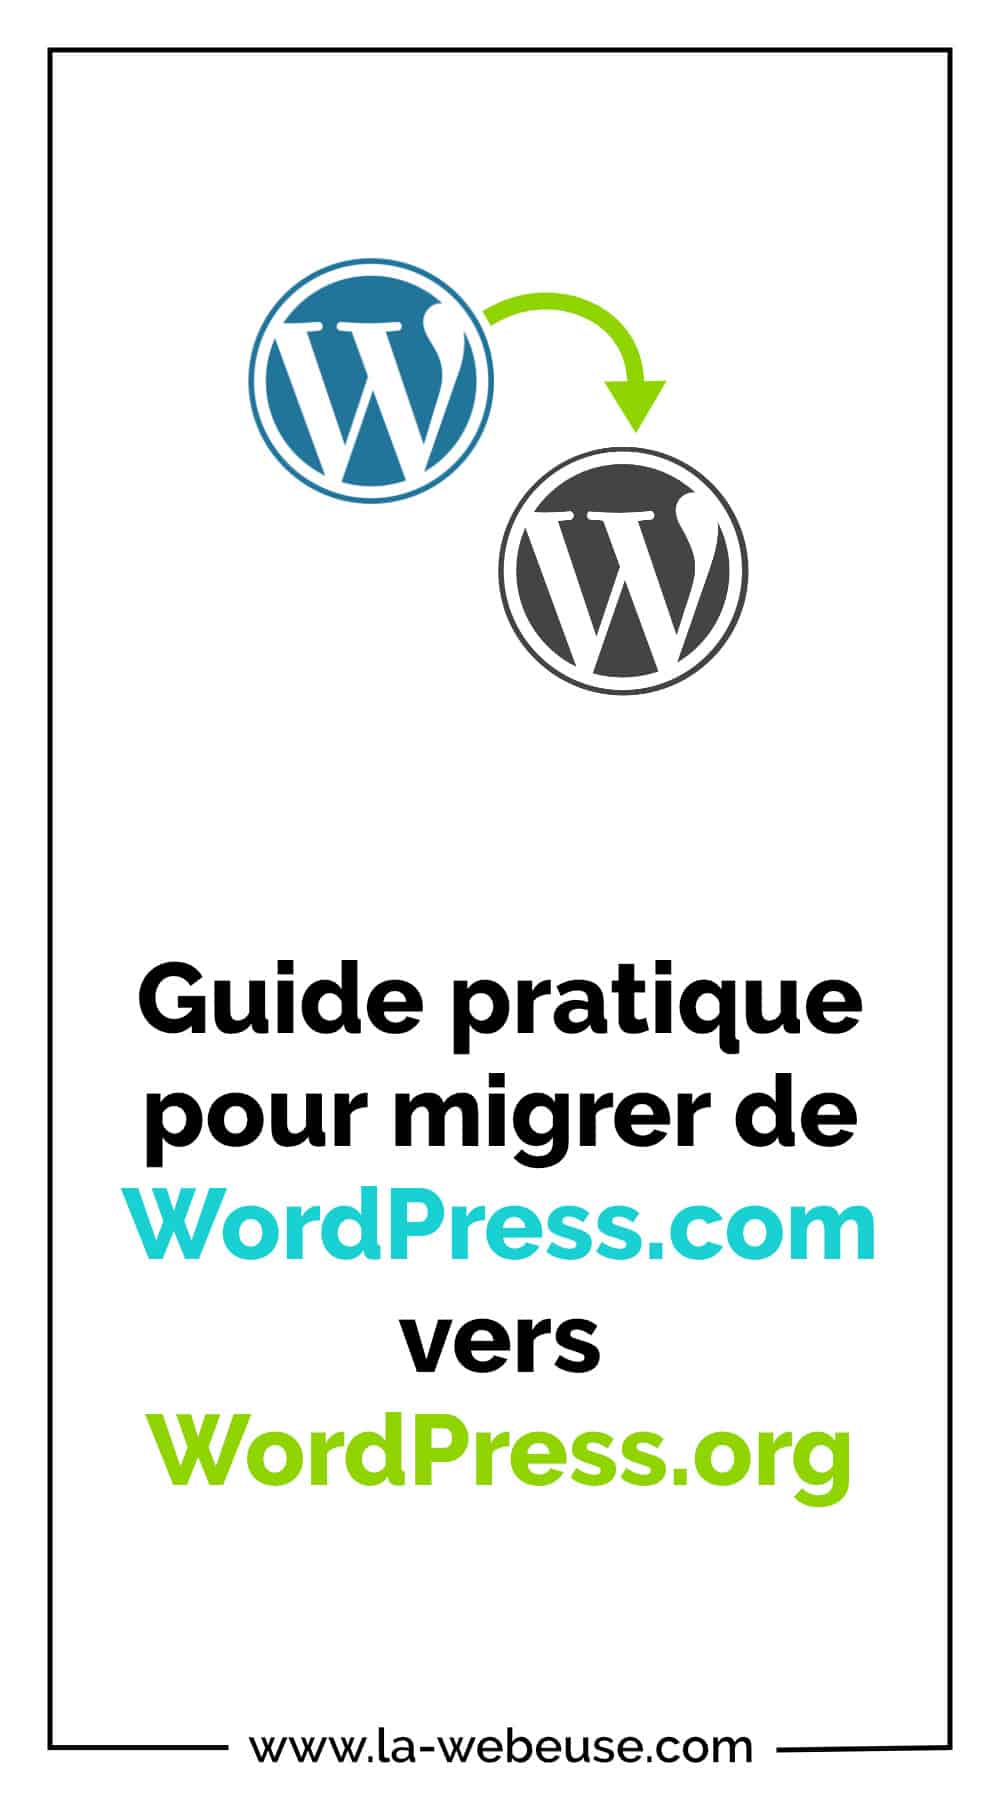 WordPress.com vers WordPress.org